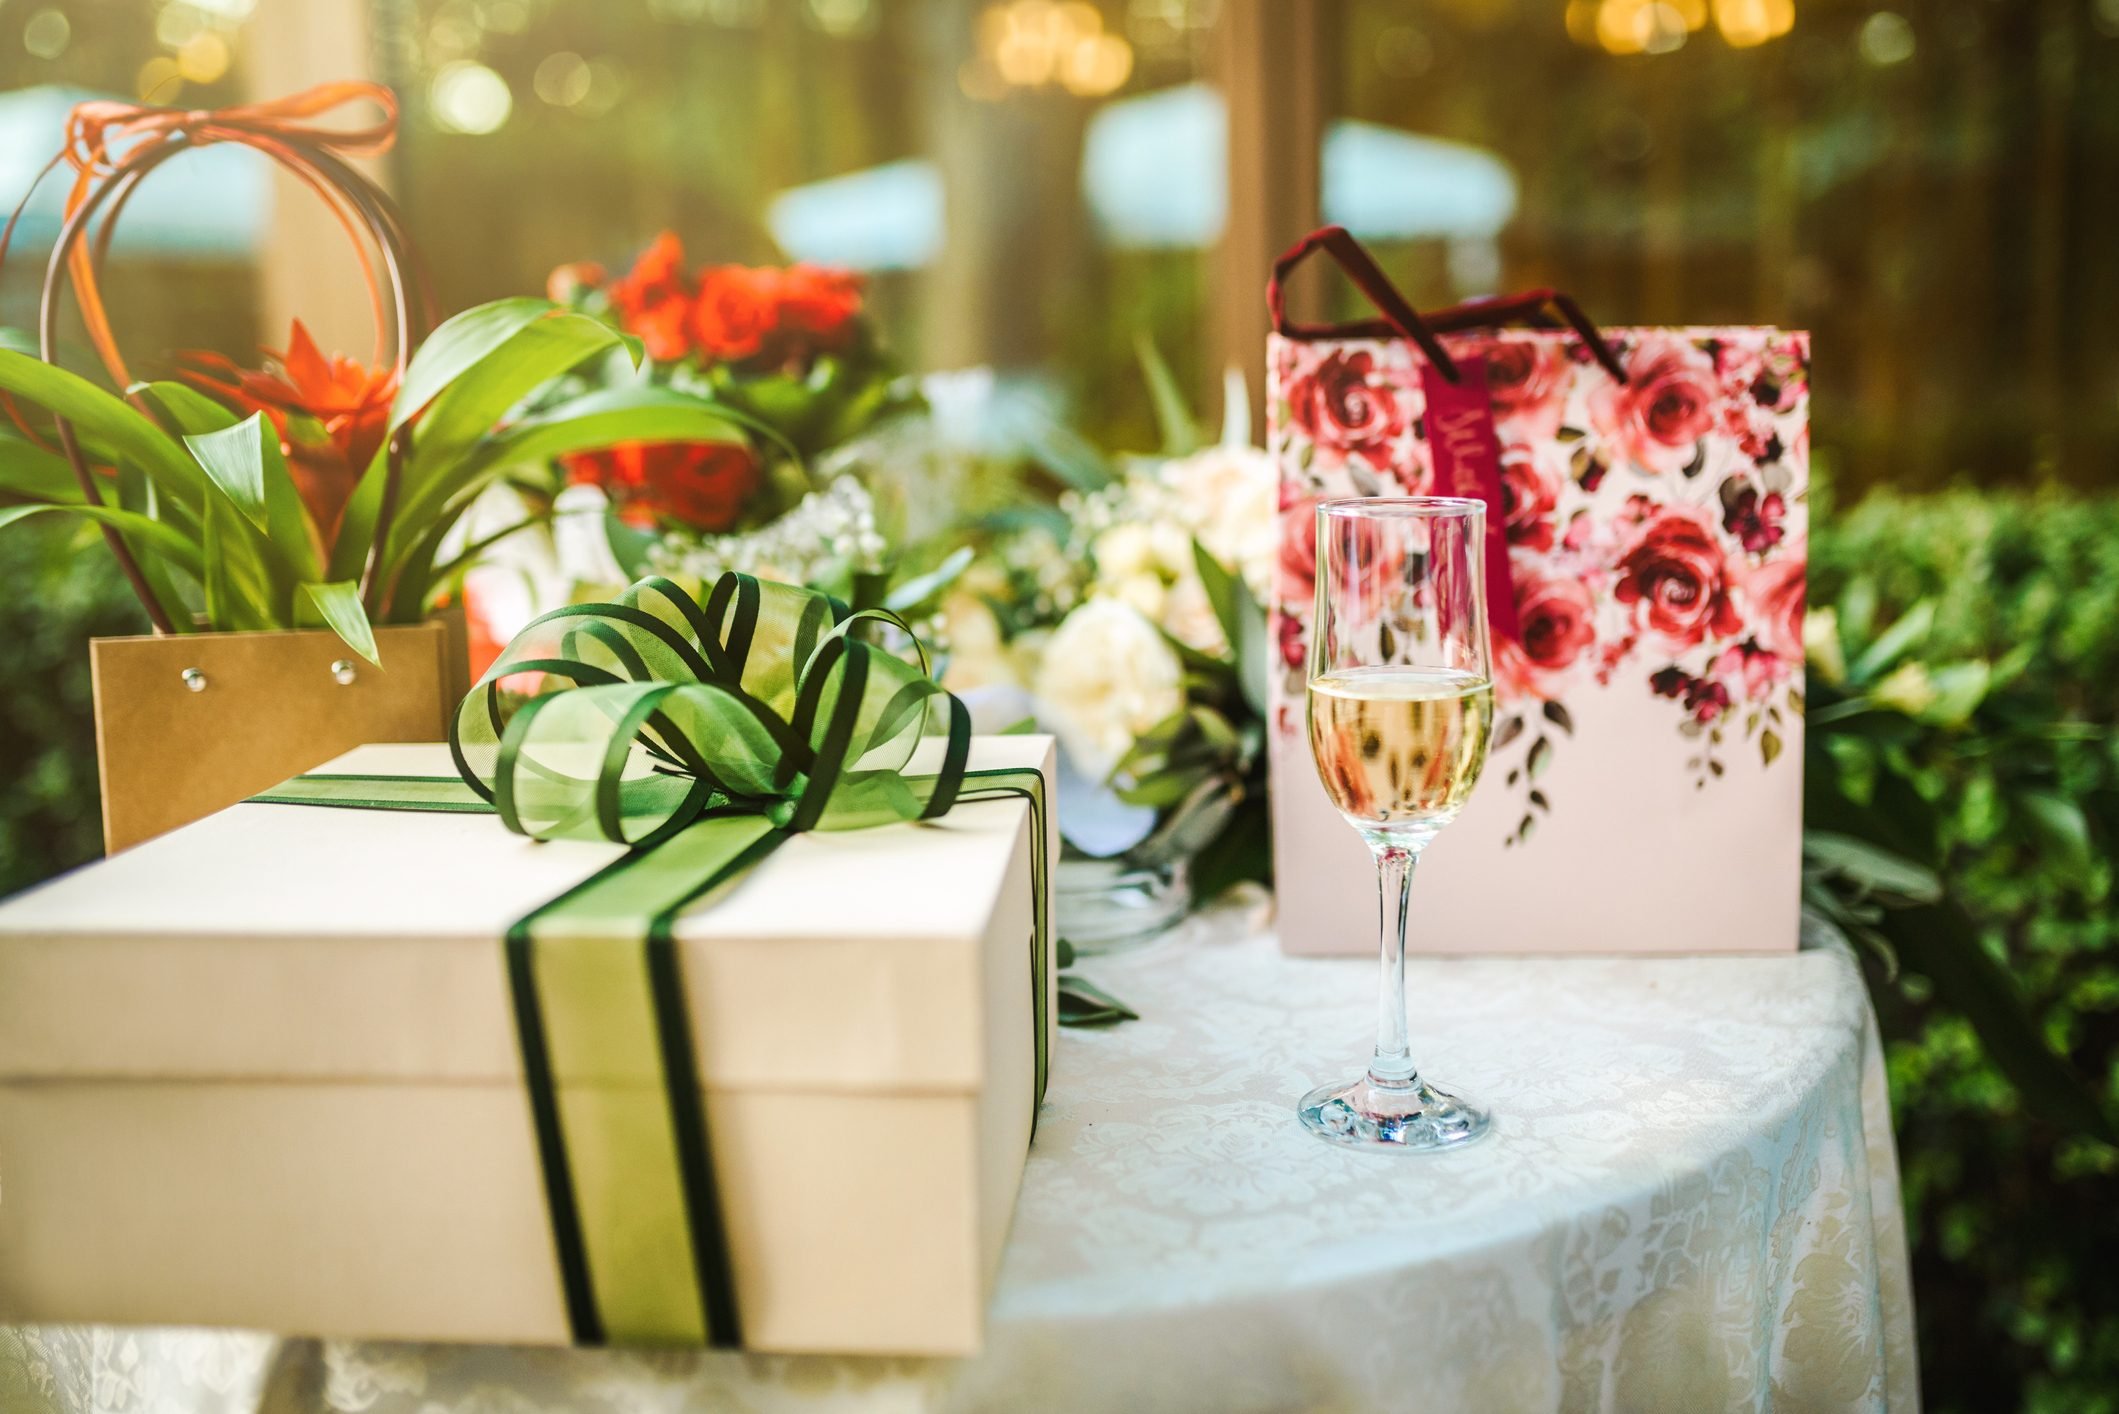 10 Best Bridal Shower Gift Ideas for the Bride -Unique Wedding